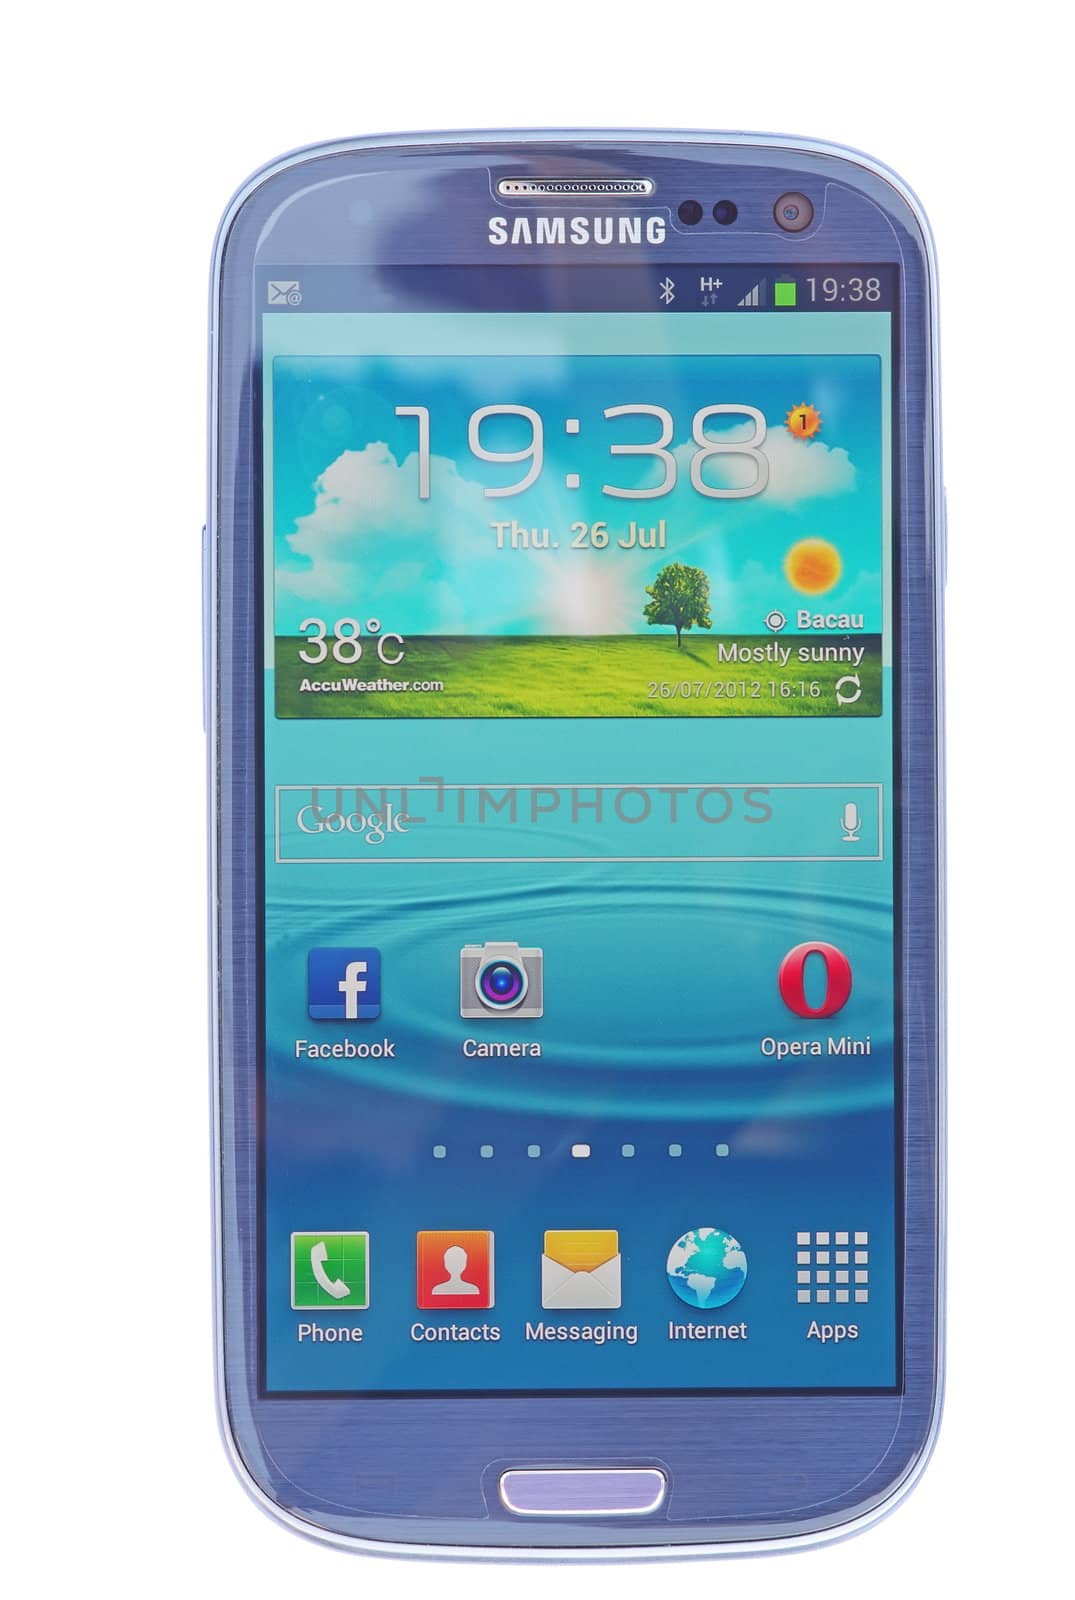 Samsung smartphone Galaxy SIII on a white background